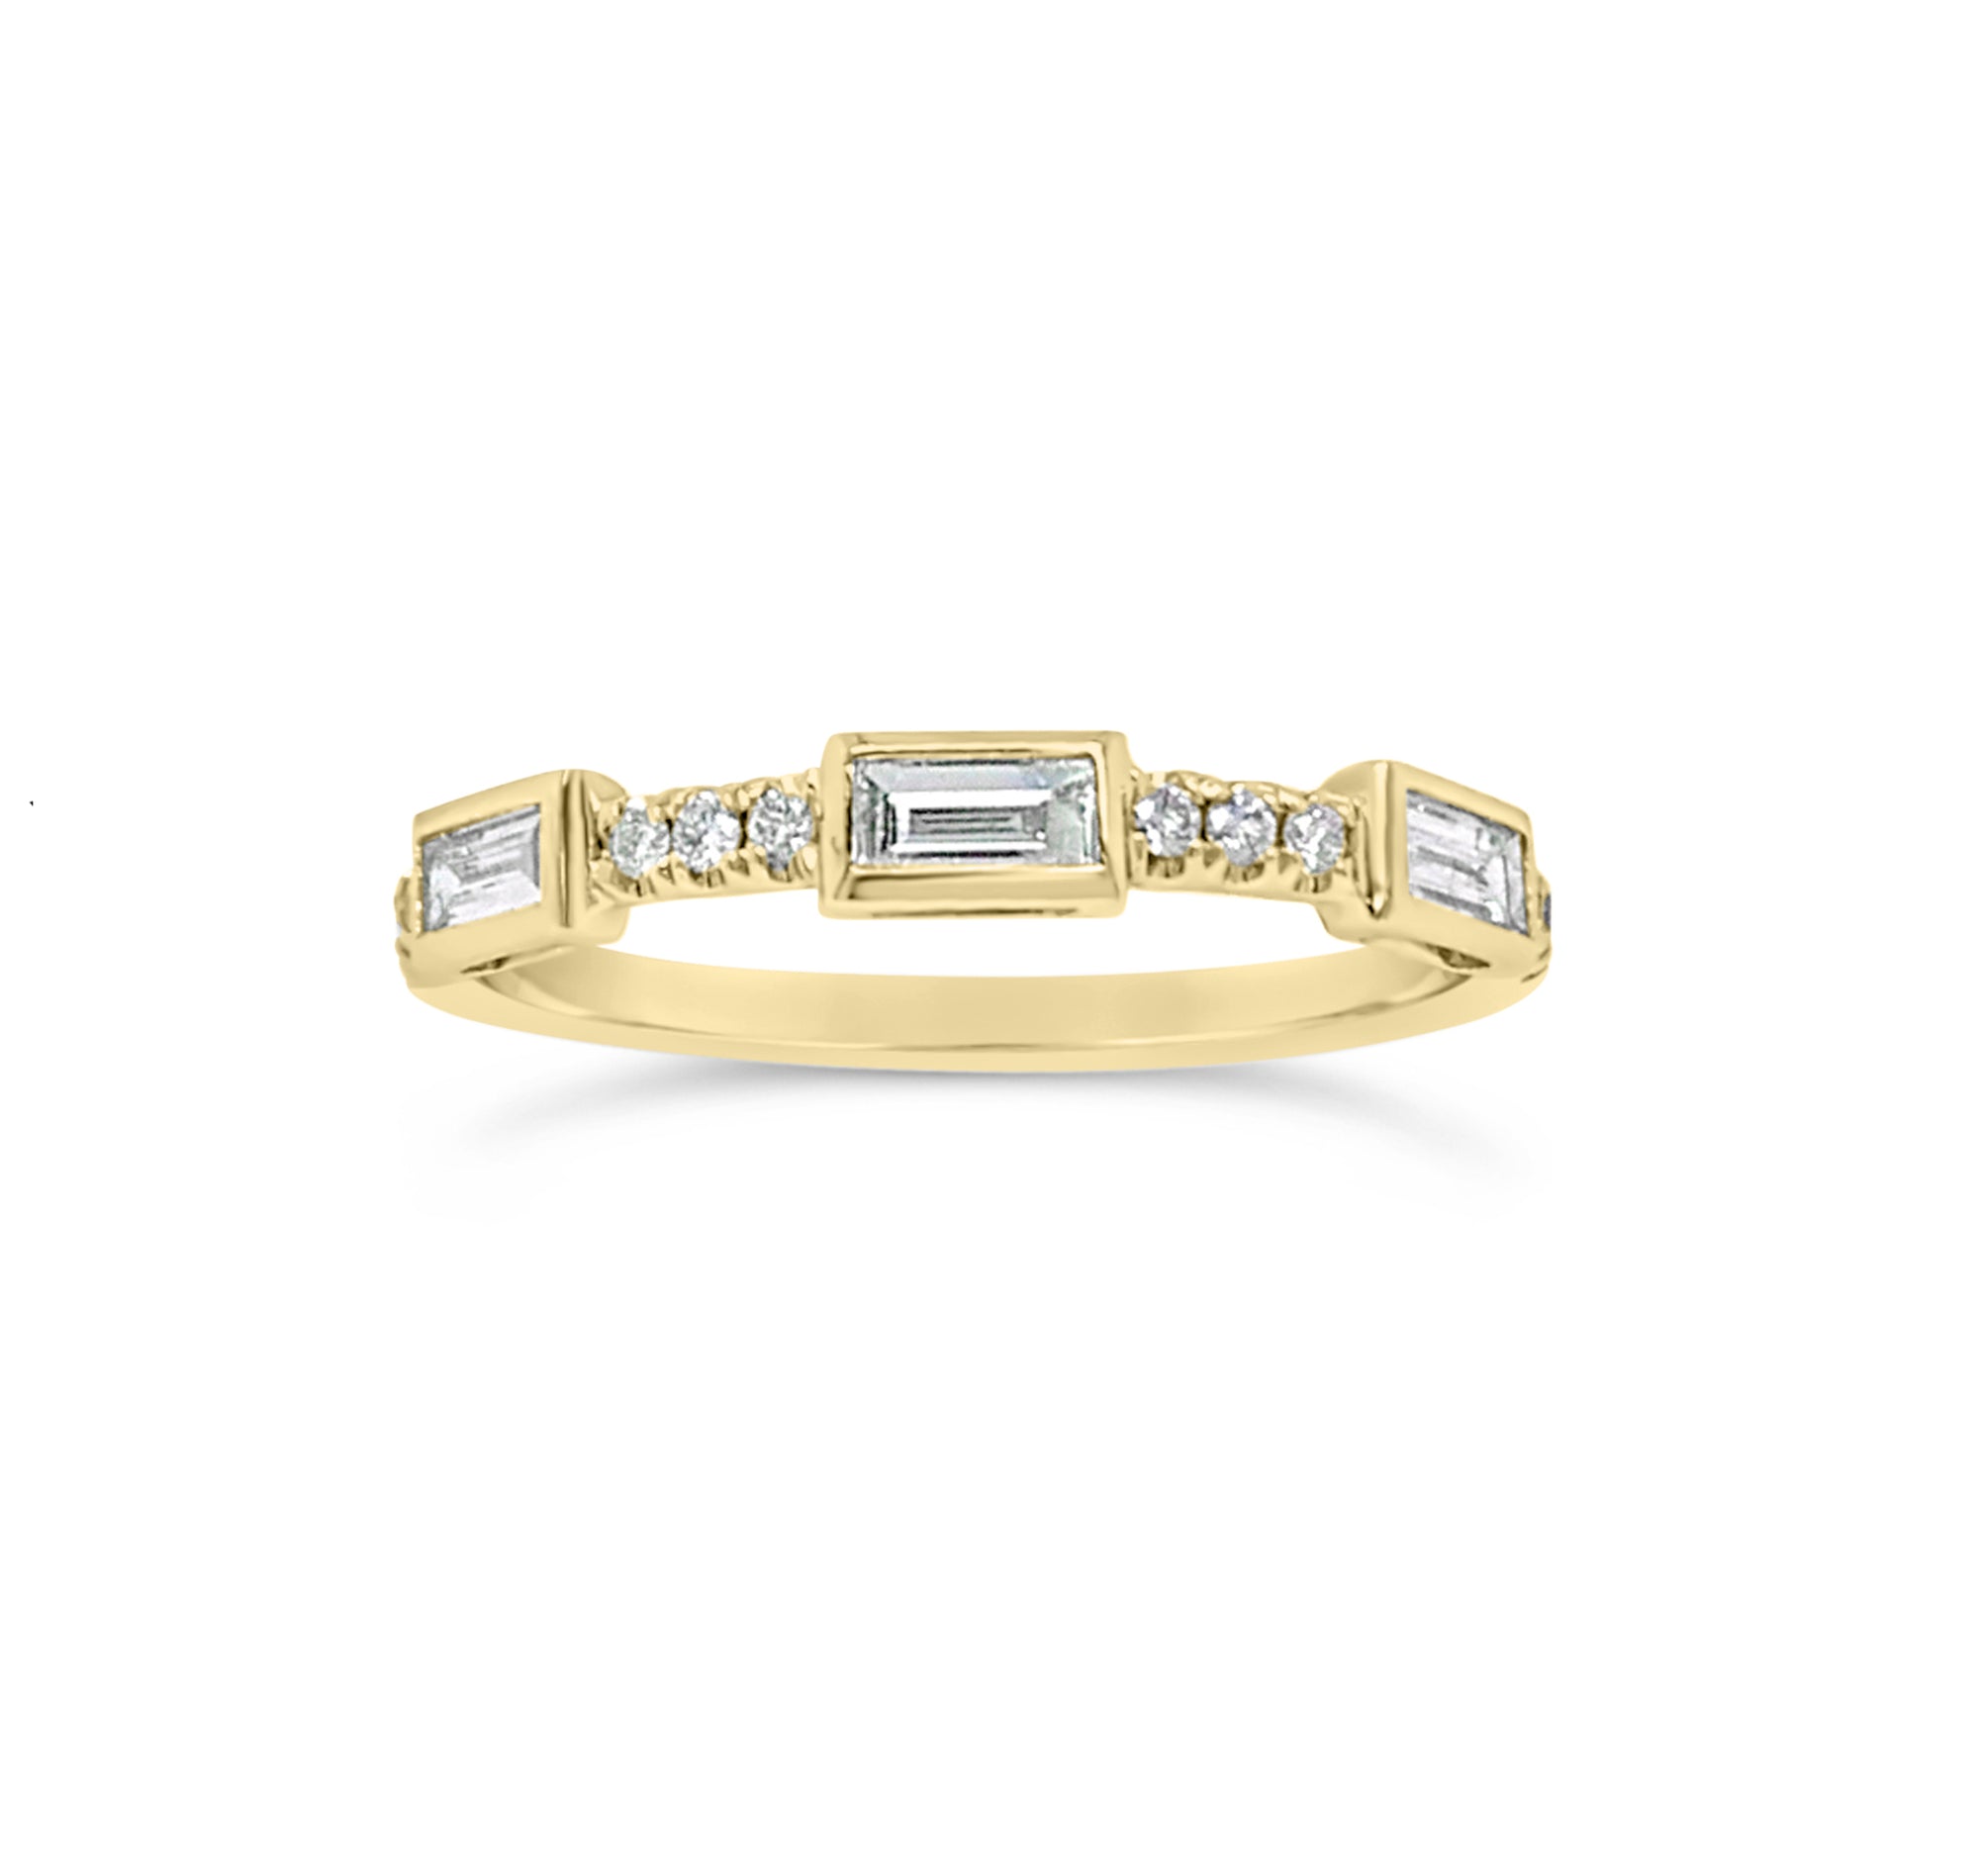 Diamond Baguette Slim Wedding Band  - 18k 1.79 GR  - 3 striahgt 0.20 total carat weight (baguettes)  - 12 round diamonds 0.10 total carat weight (rounds)